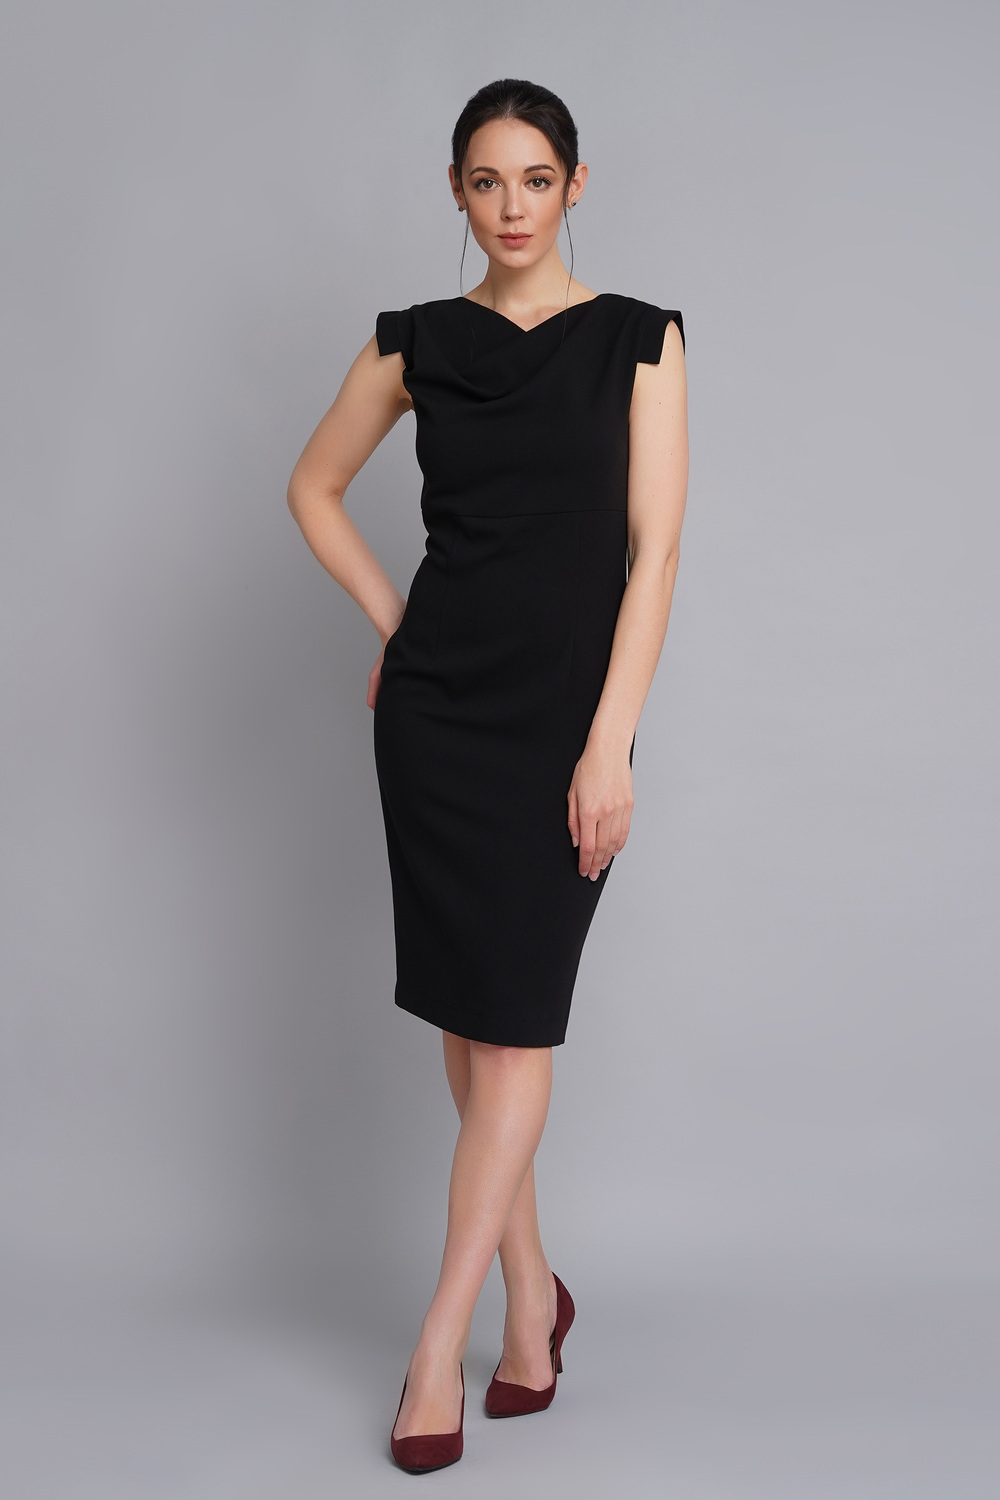 Little Black Dress | Custom Made Women's Suits, Dresses, Blazers & More